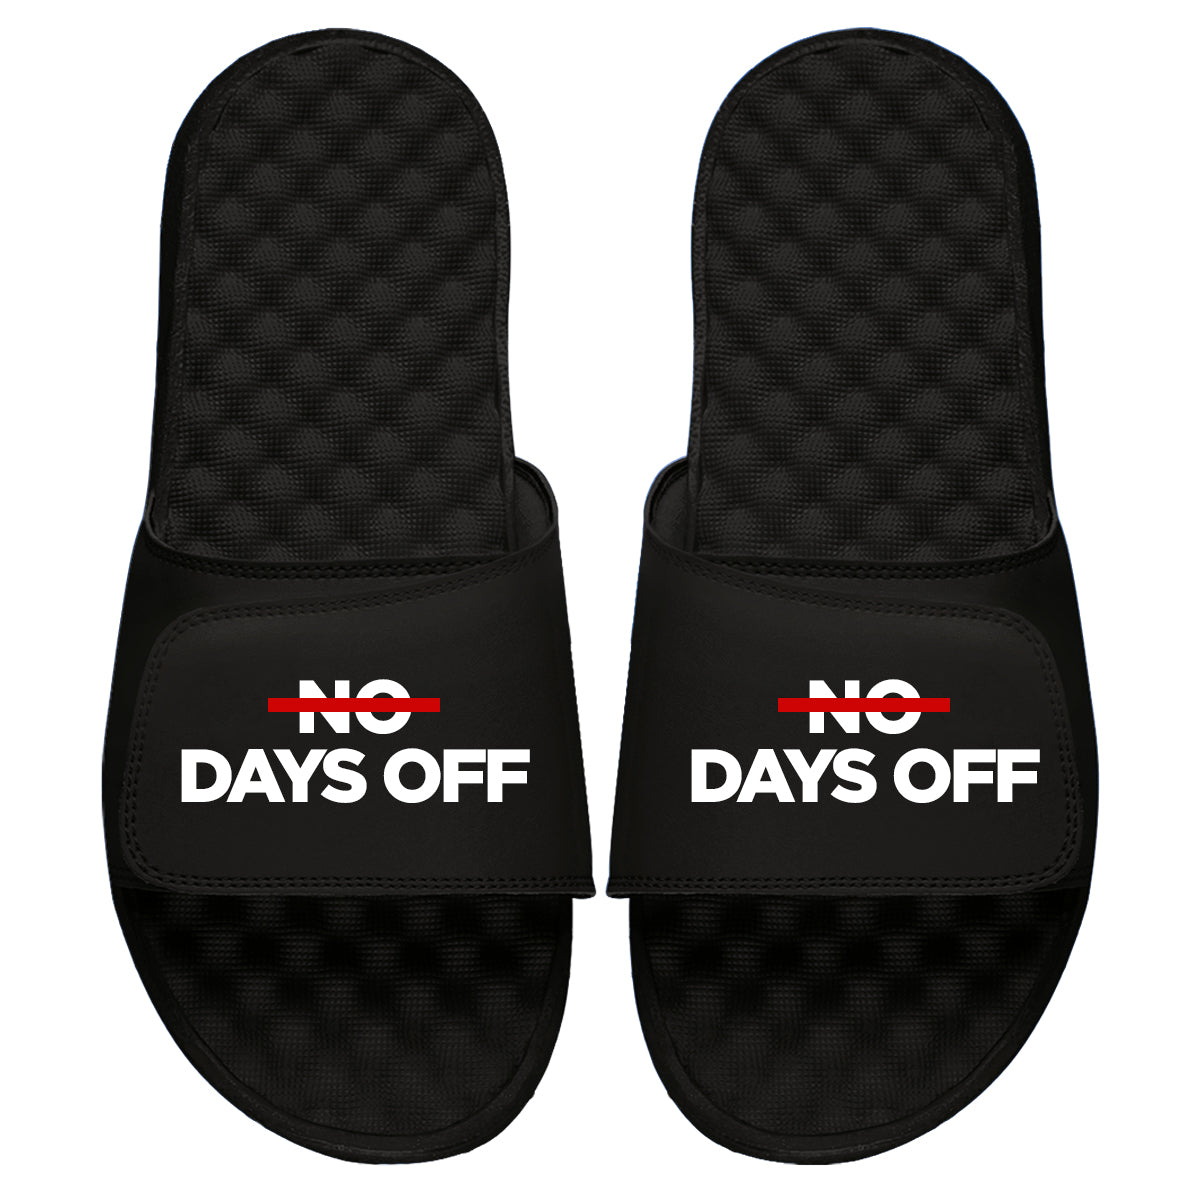 Caskilla: No Days Off Slides